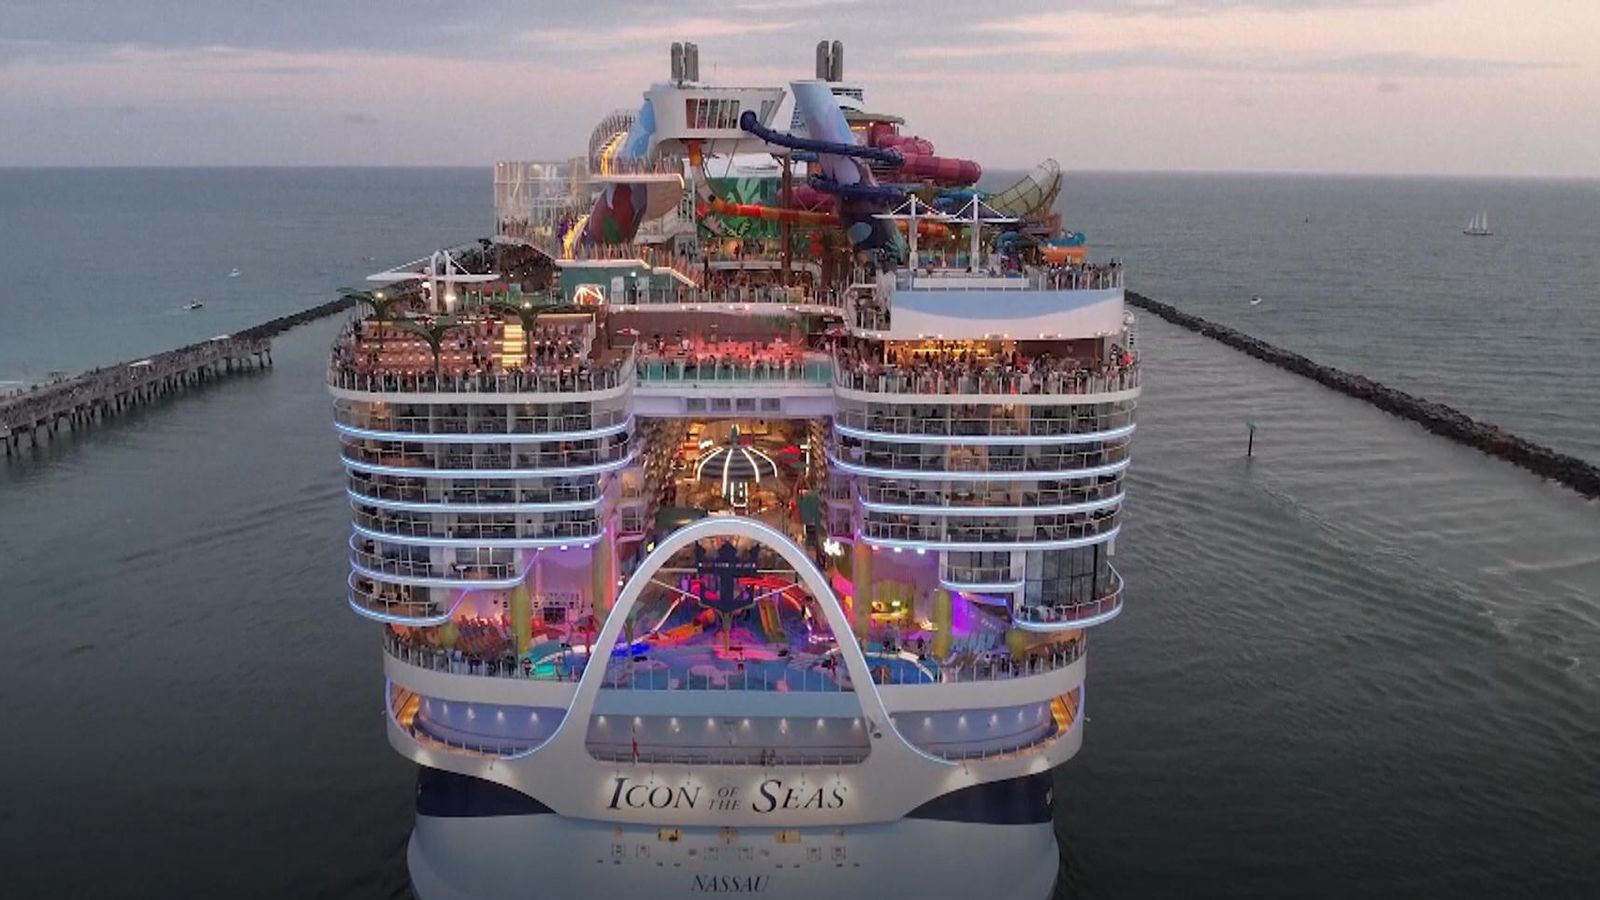 Disney's new cruise ship setting sail on maiden voyage